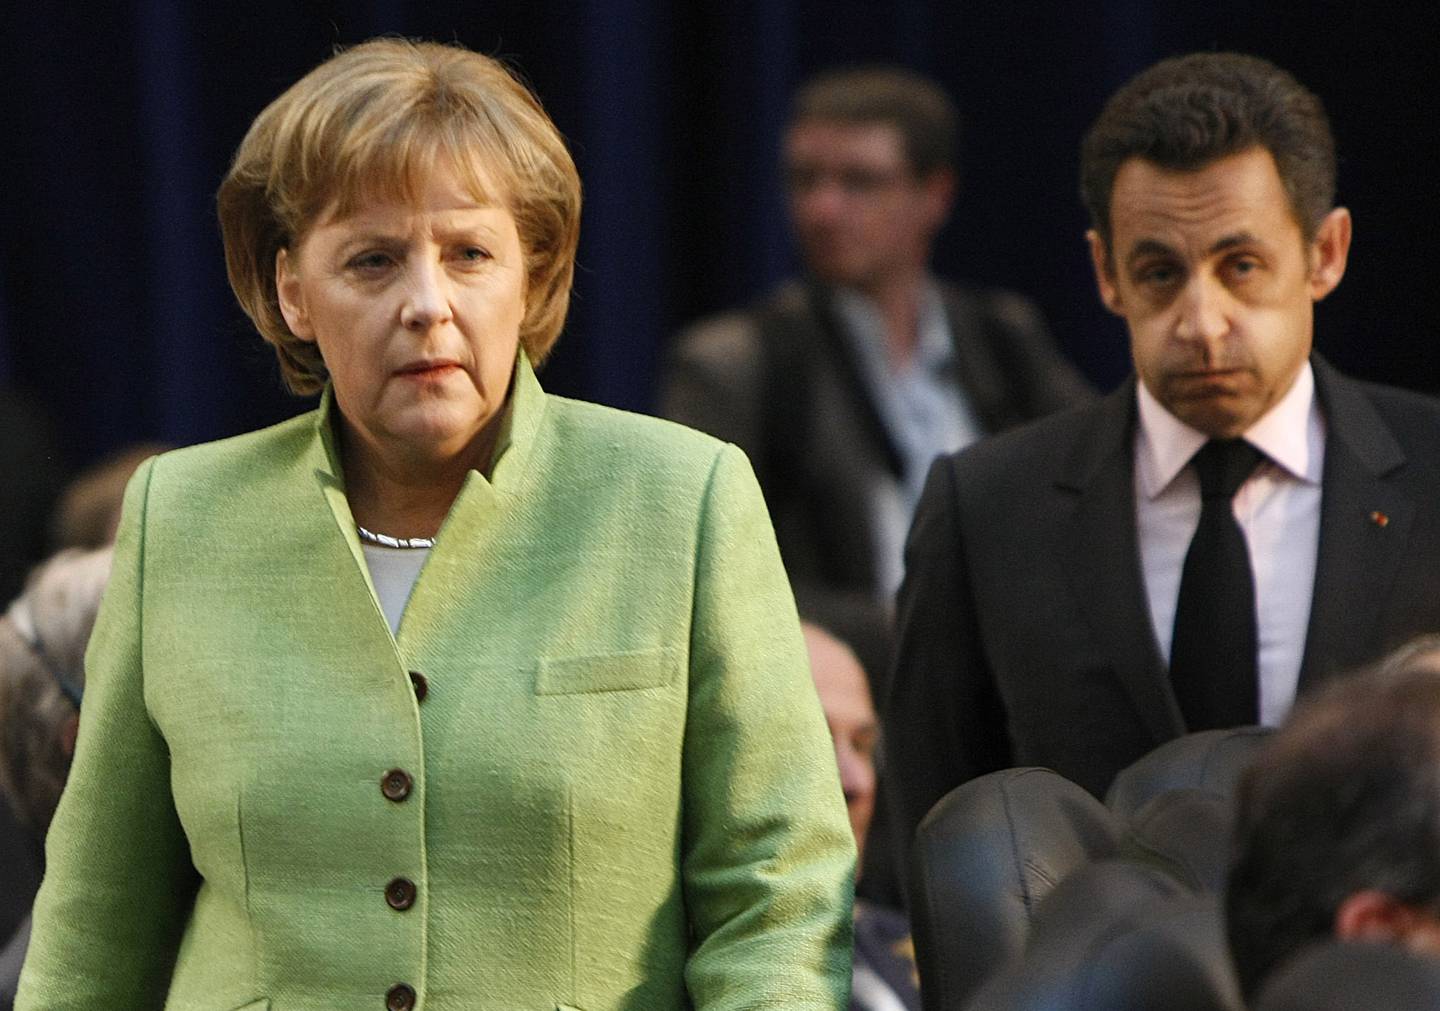 Angela Merkel and Nicolas Sarkozy were urged by Ukraine to visit the site of apparent massacres near Kyiv. AP 